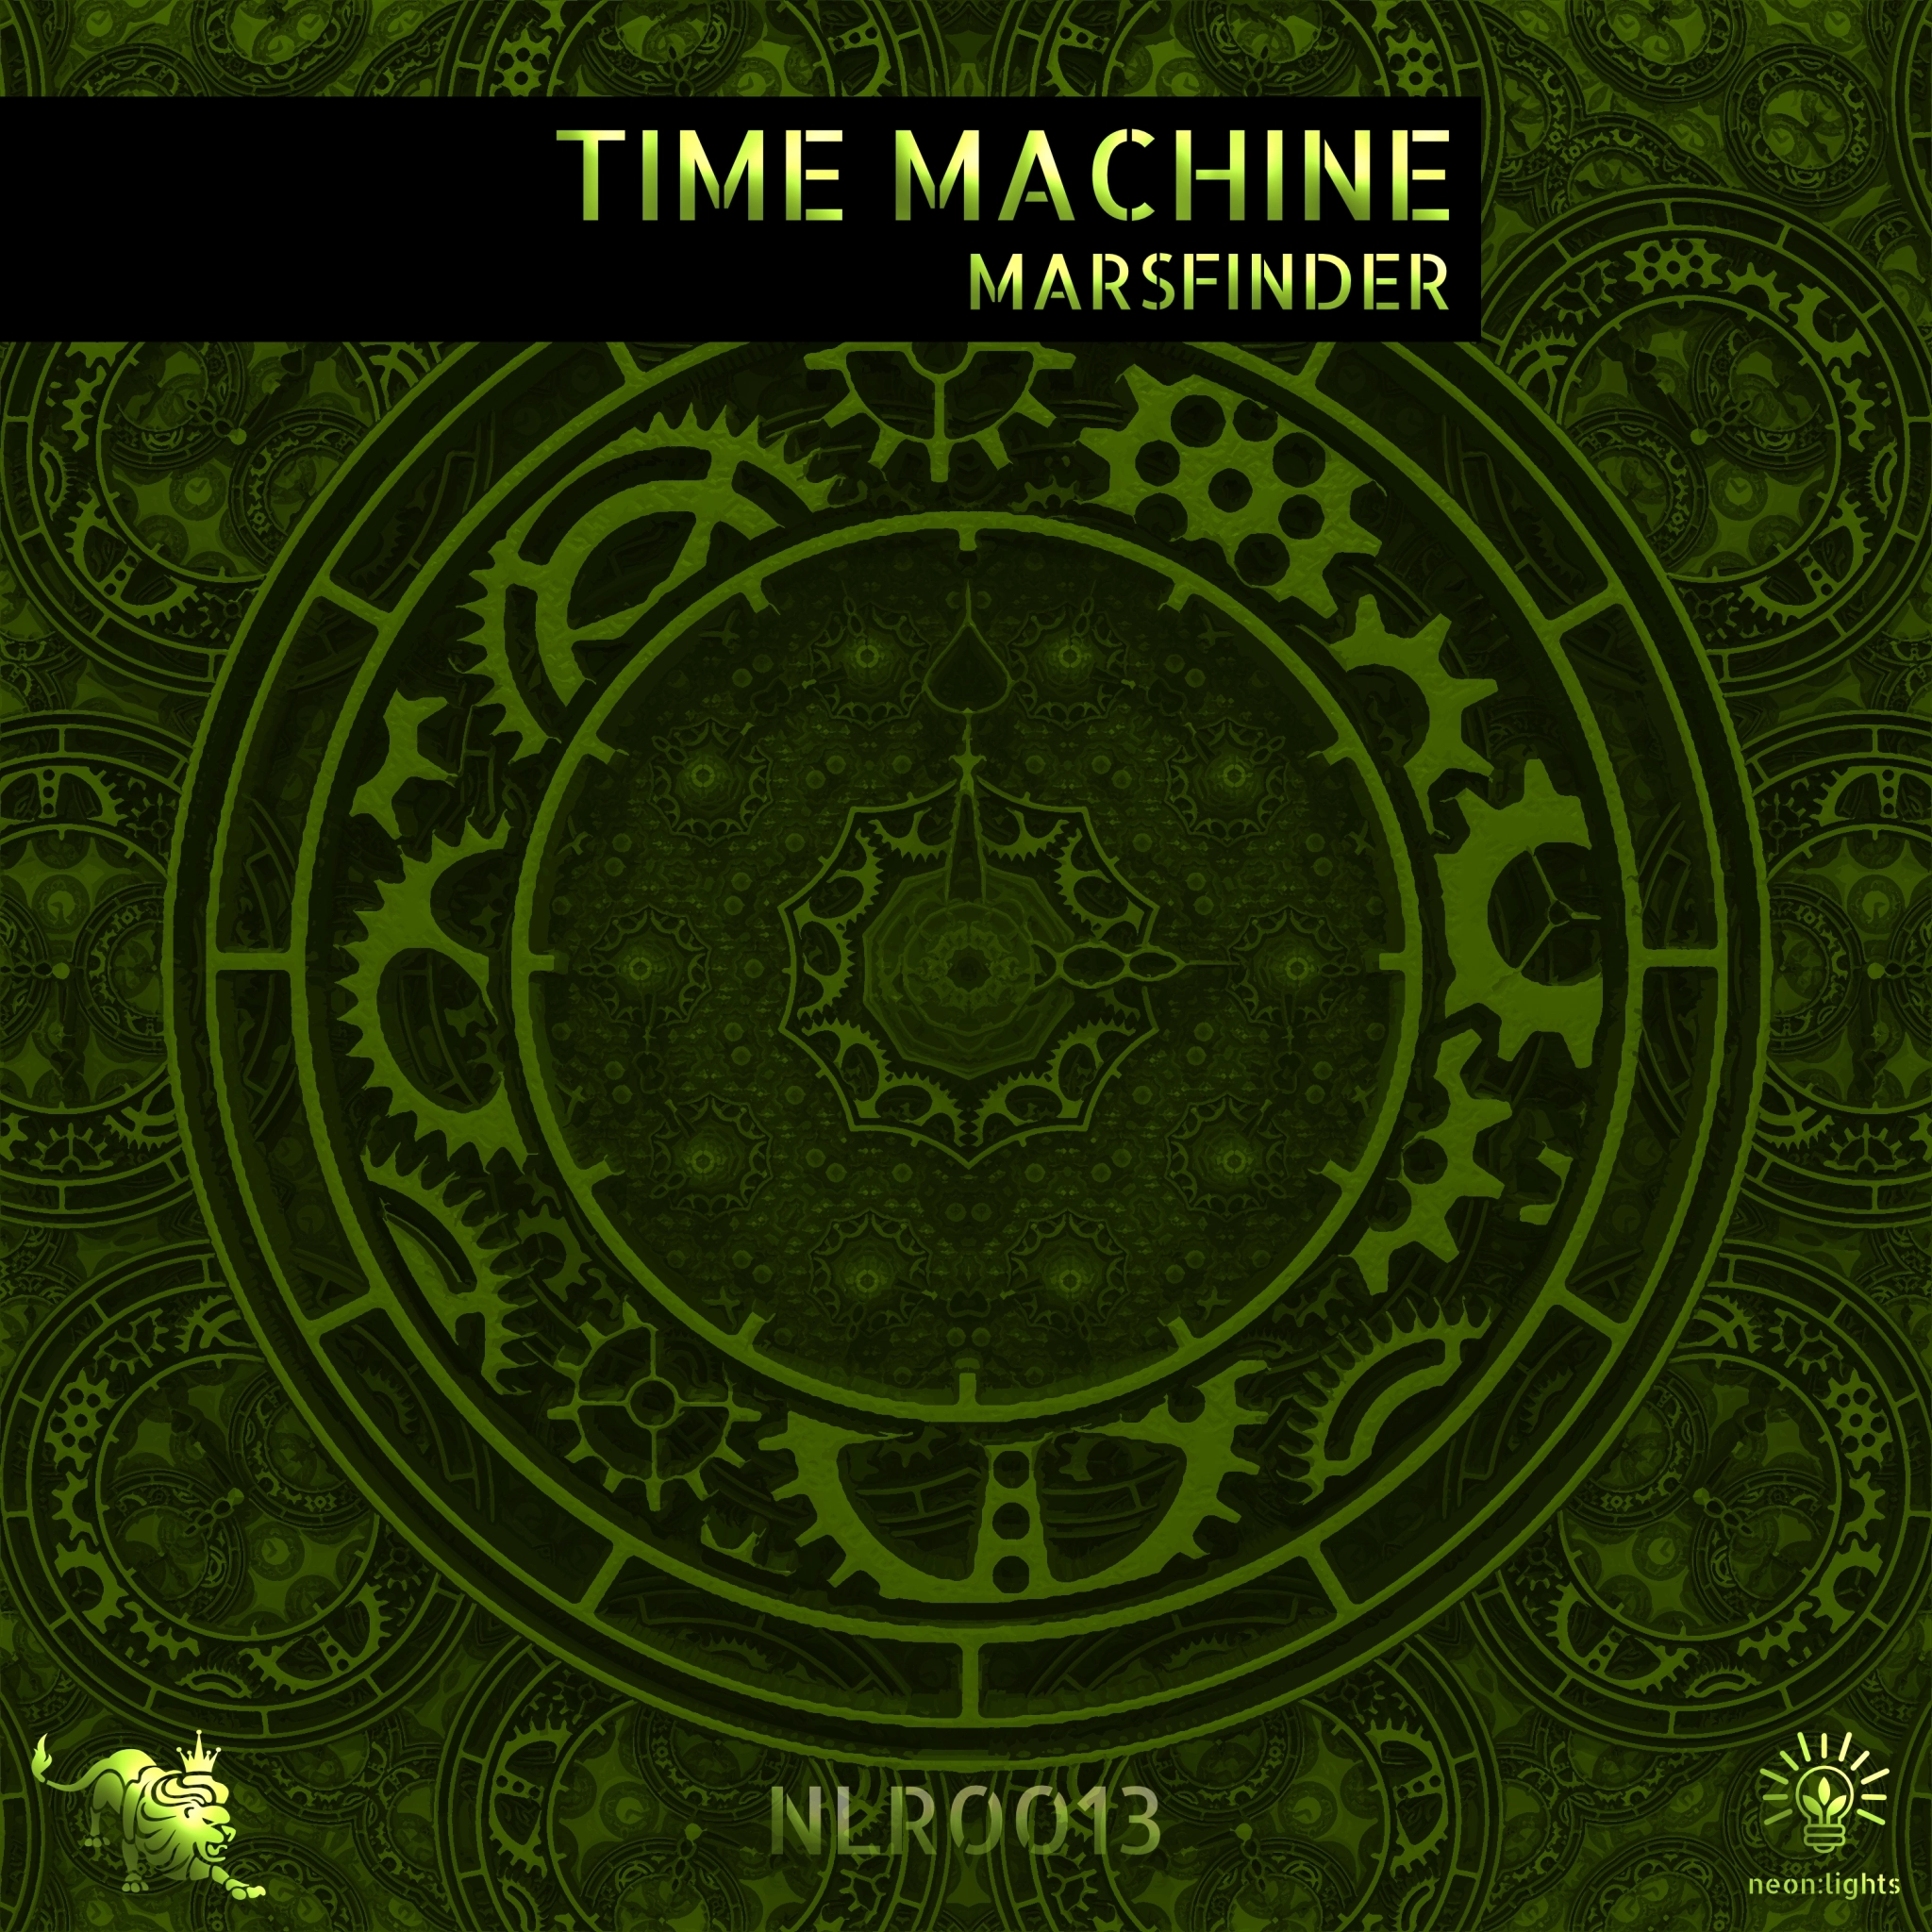 COMING SOON: Time Machine